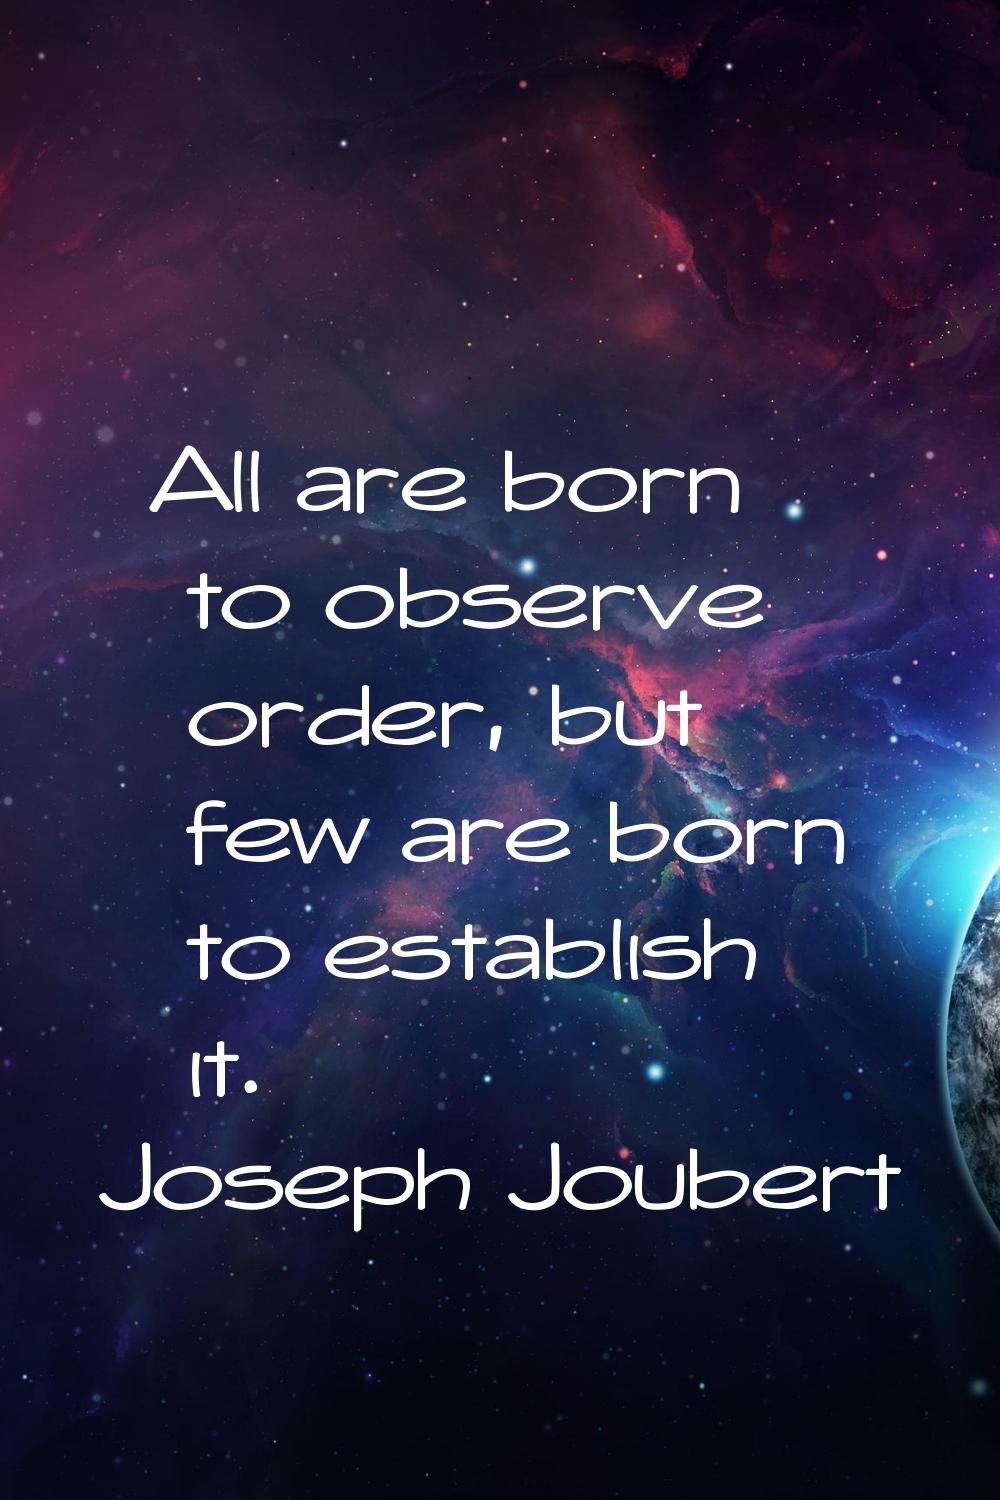 All are born to observe order, but few are born to establish it.